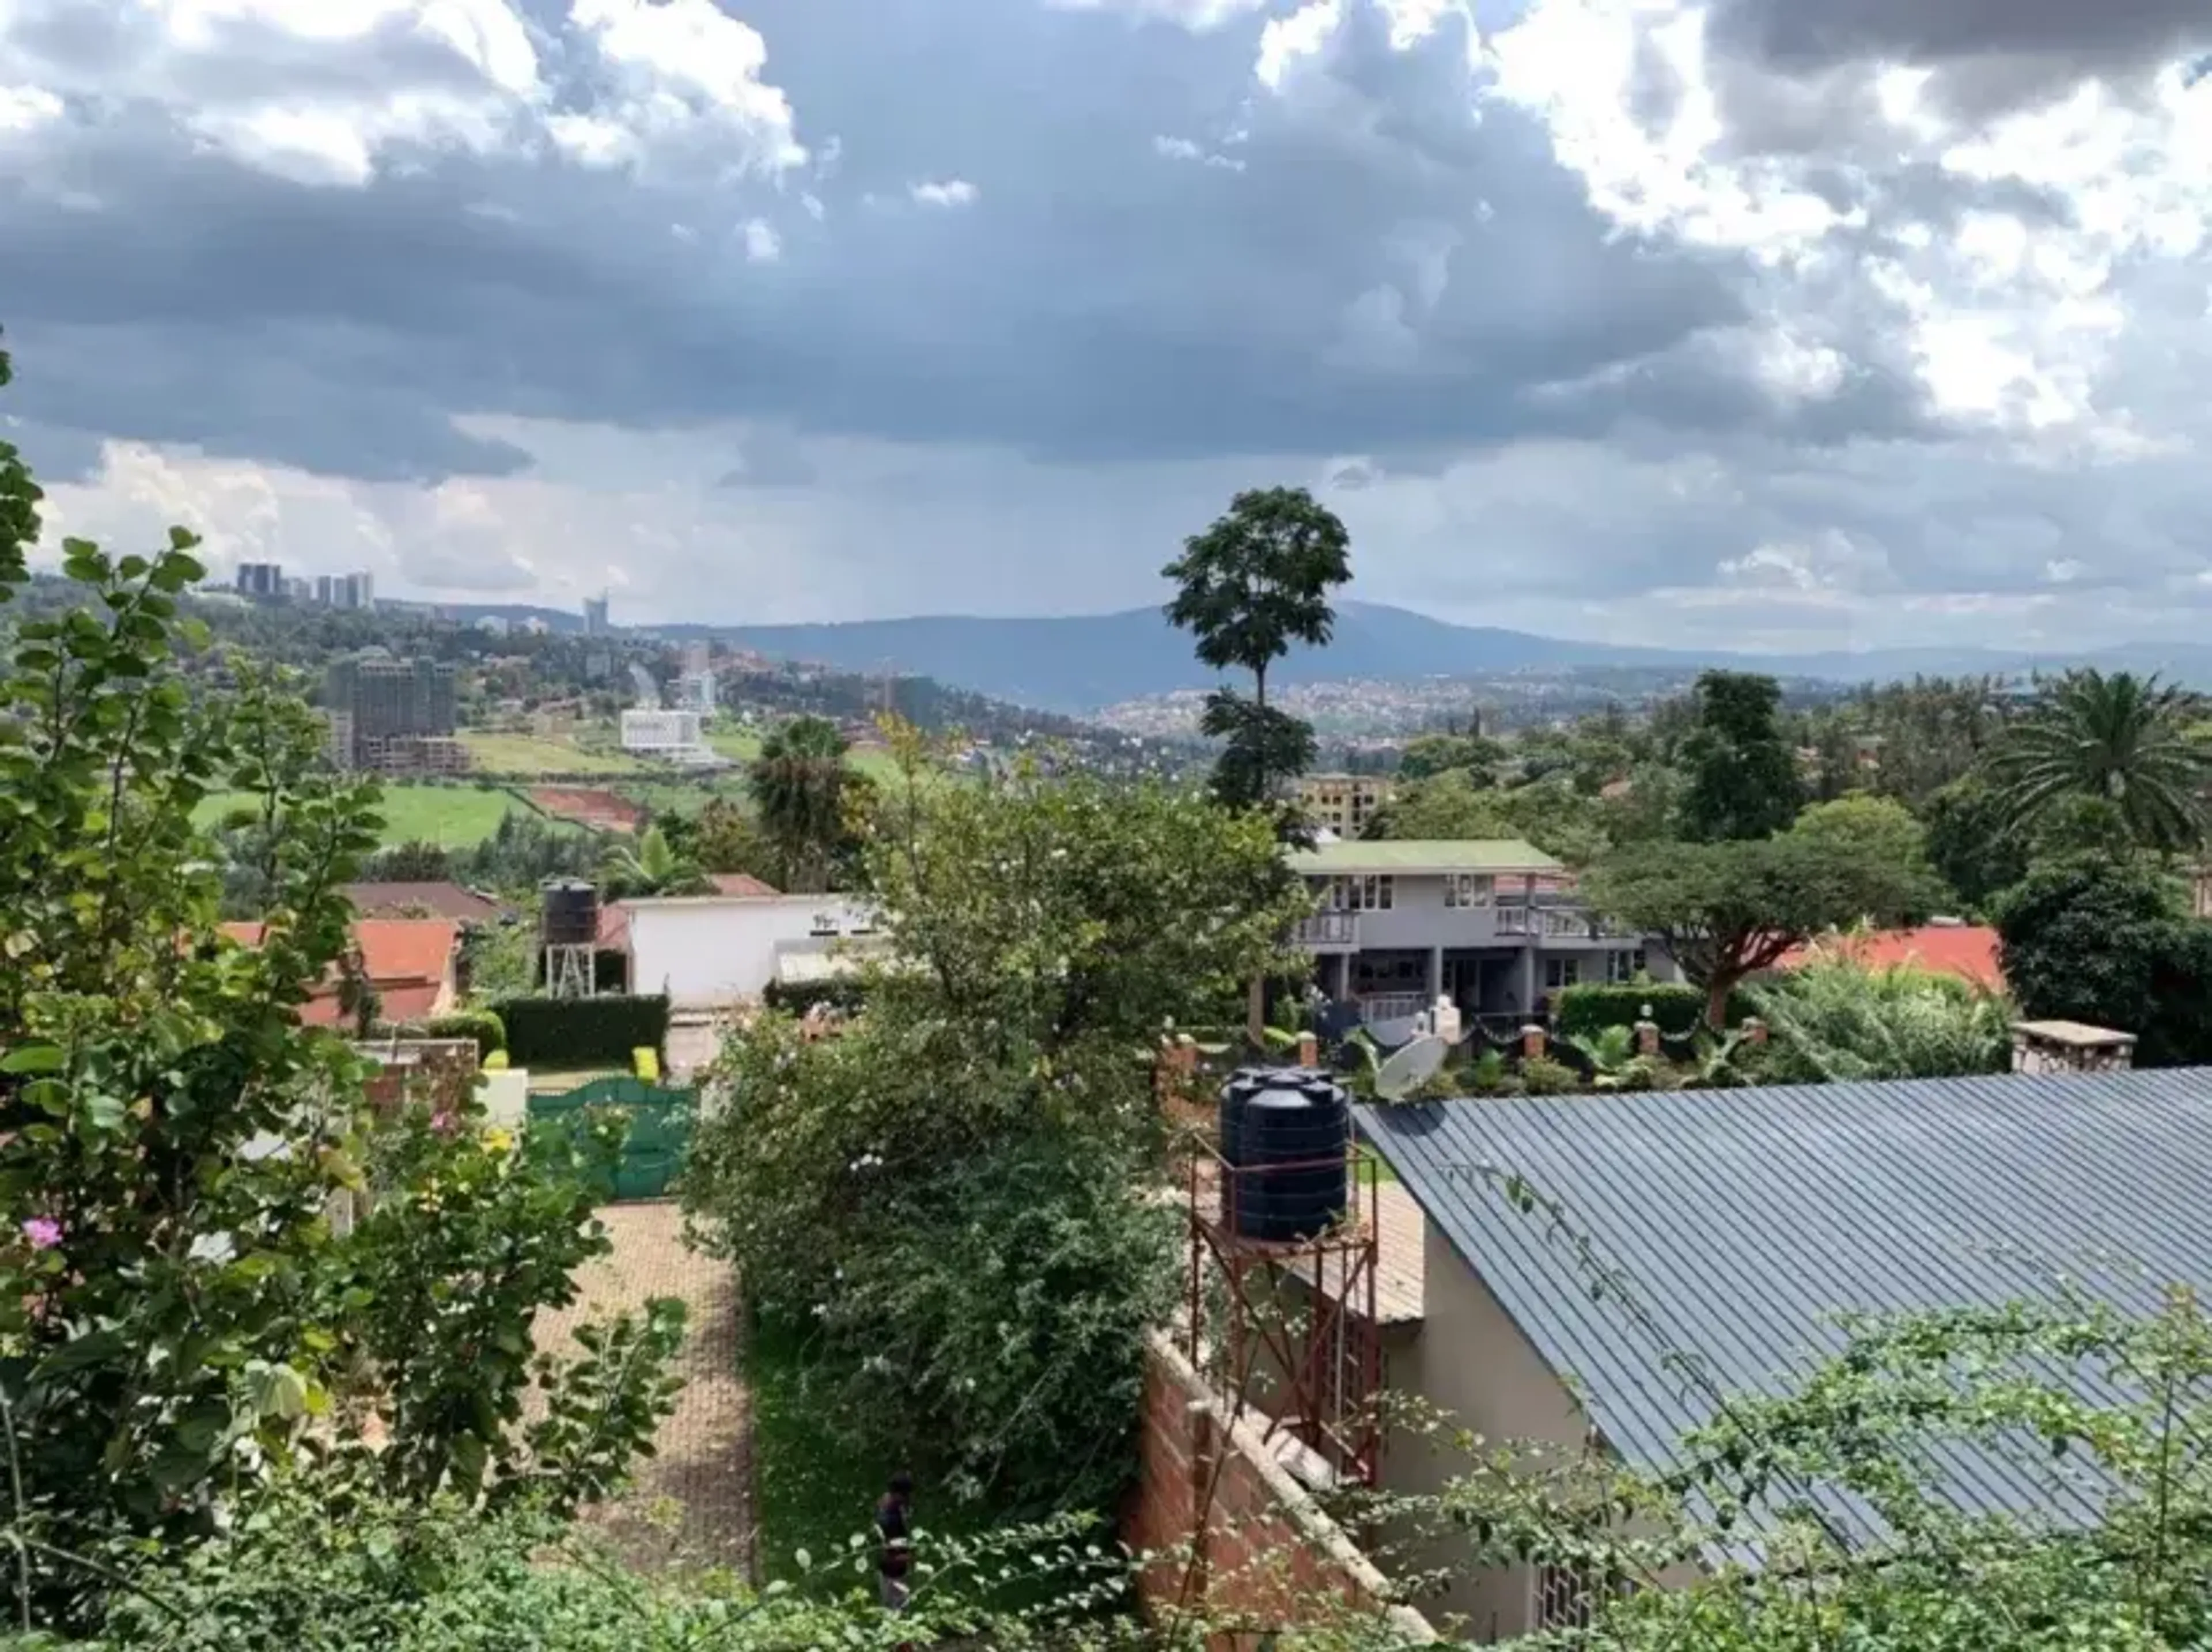 Outskirts of Kigali